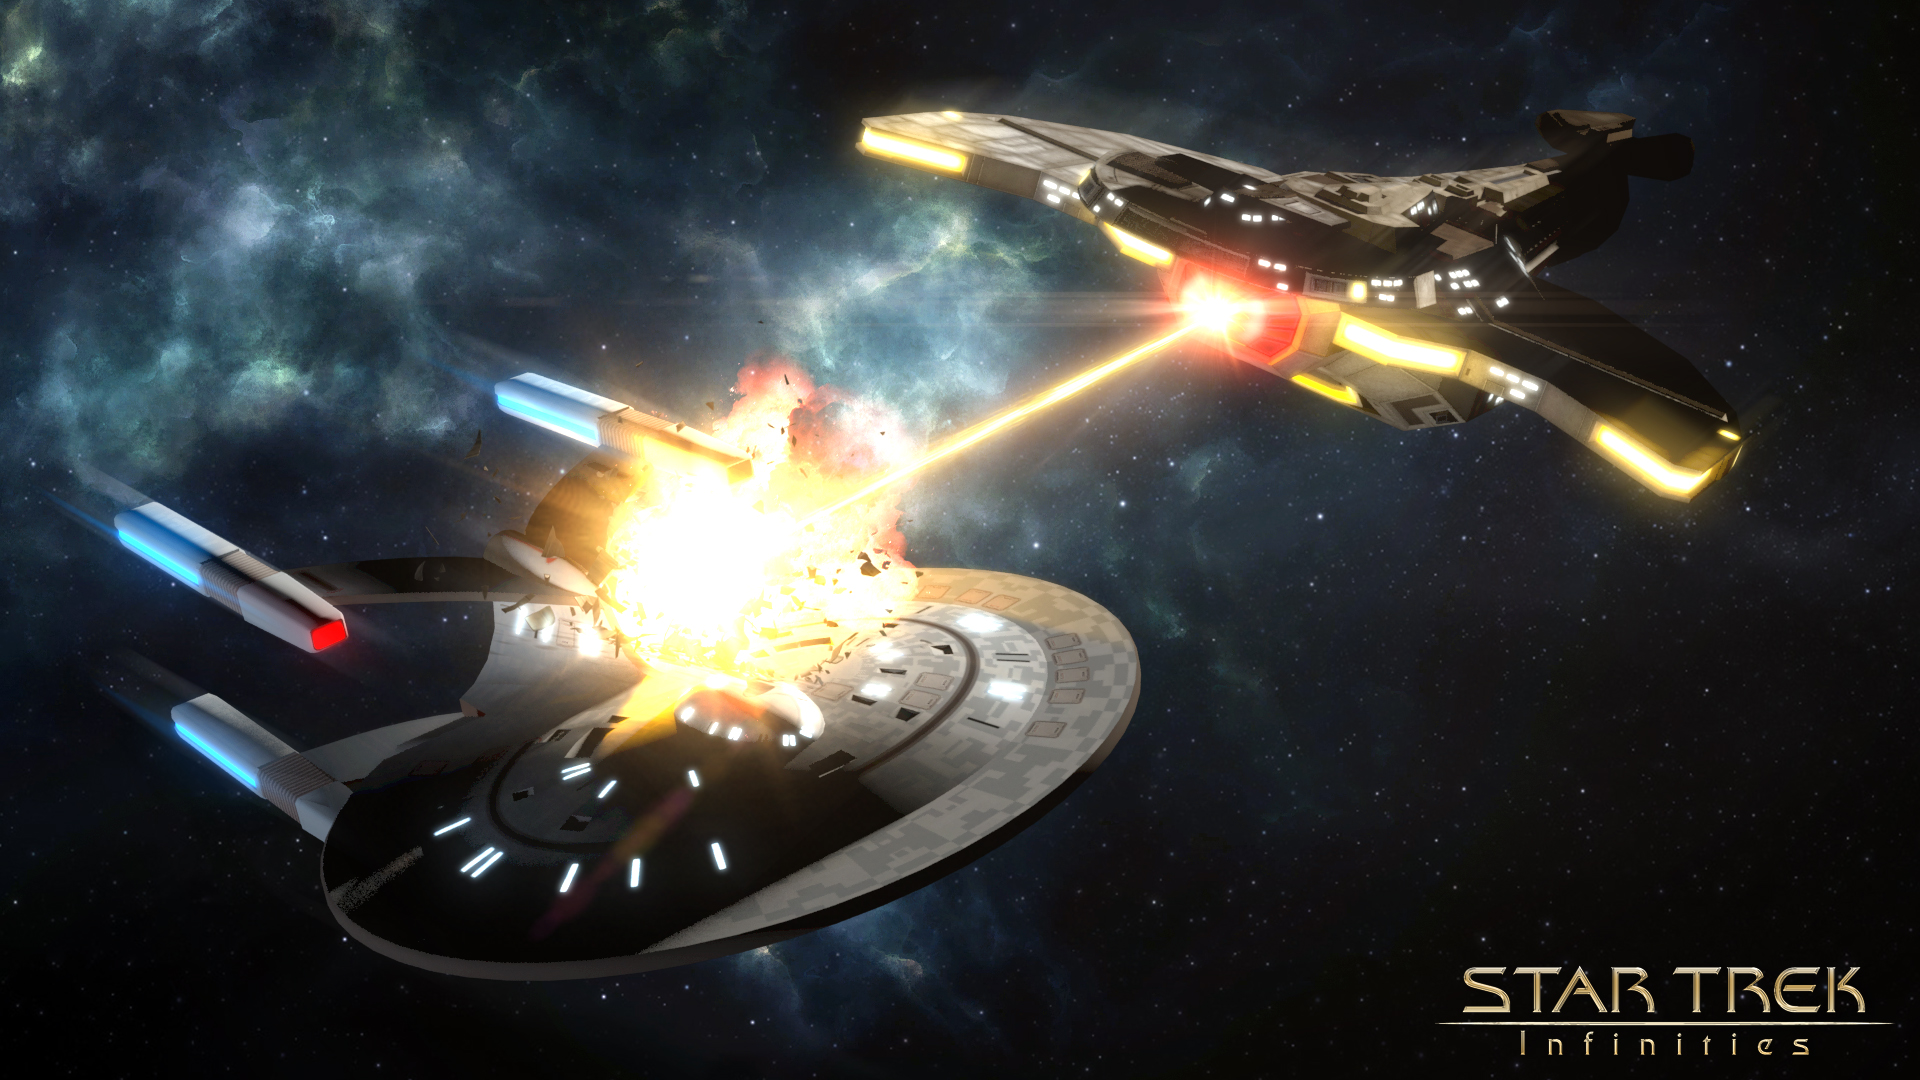 Sti Wallpapers Image Star Trek Infinities Mod For Stellaris Mod Db